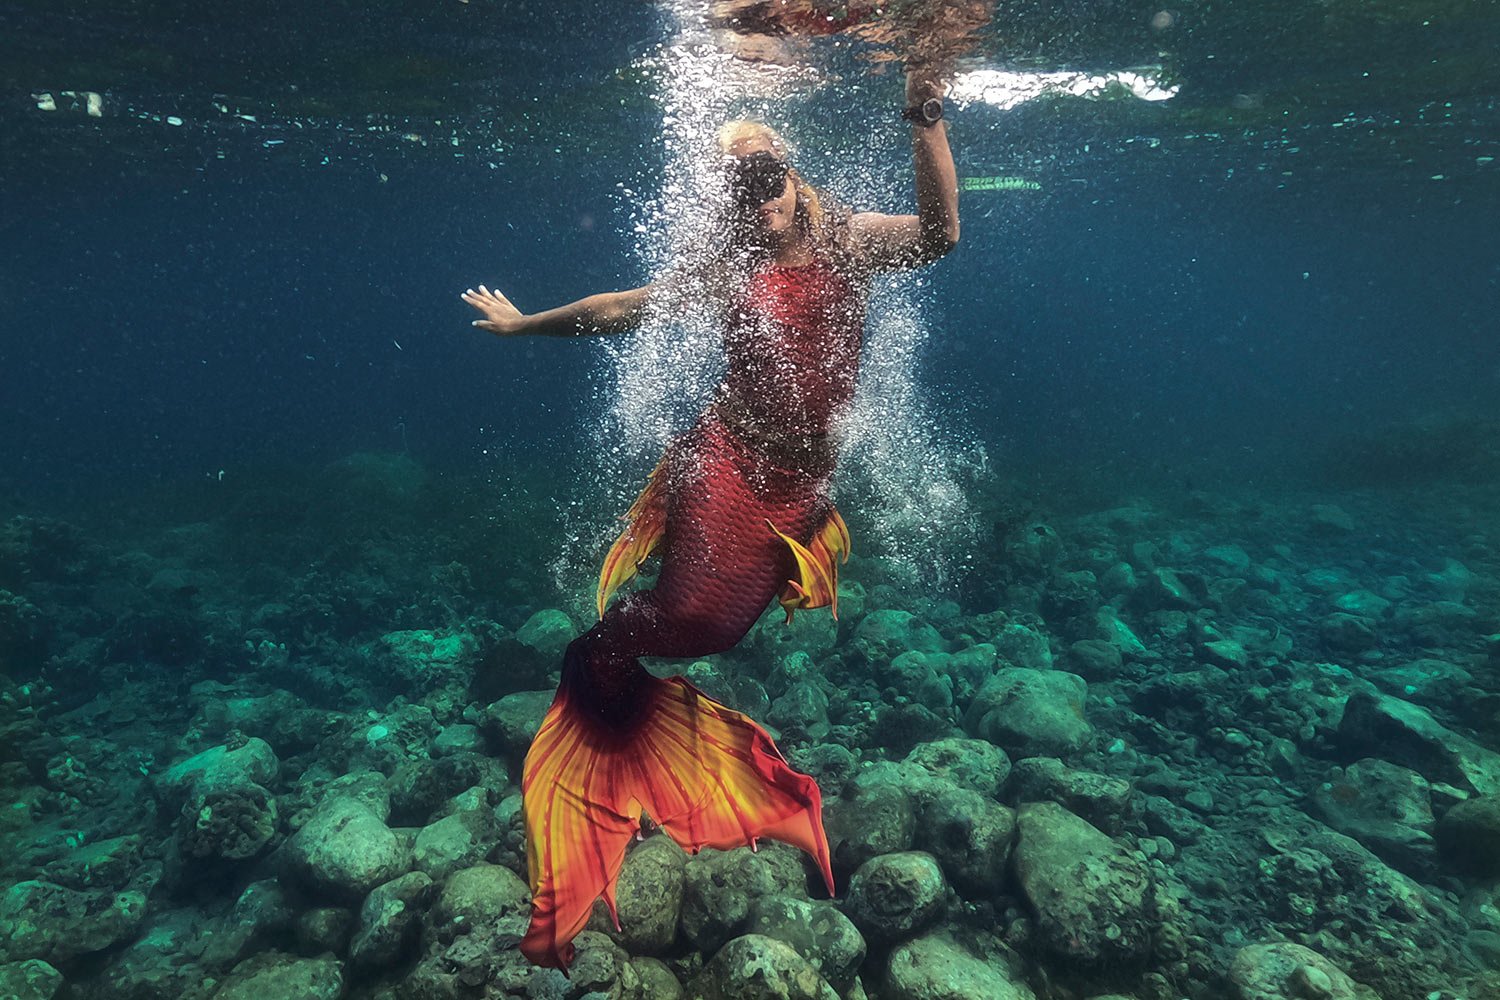 Fin-tastic! Growing 'mermaiding' subculture makes a splash — AP Photos